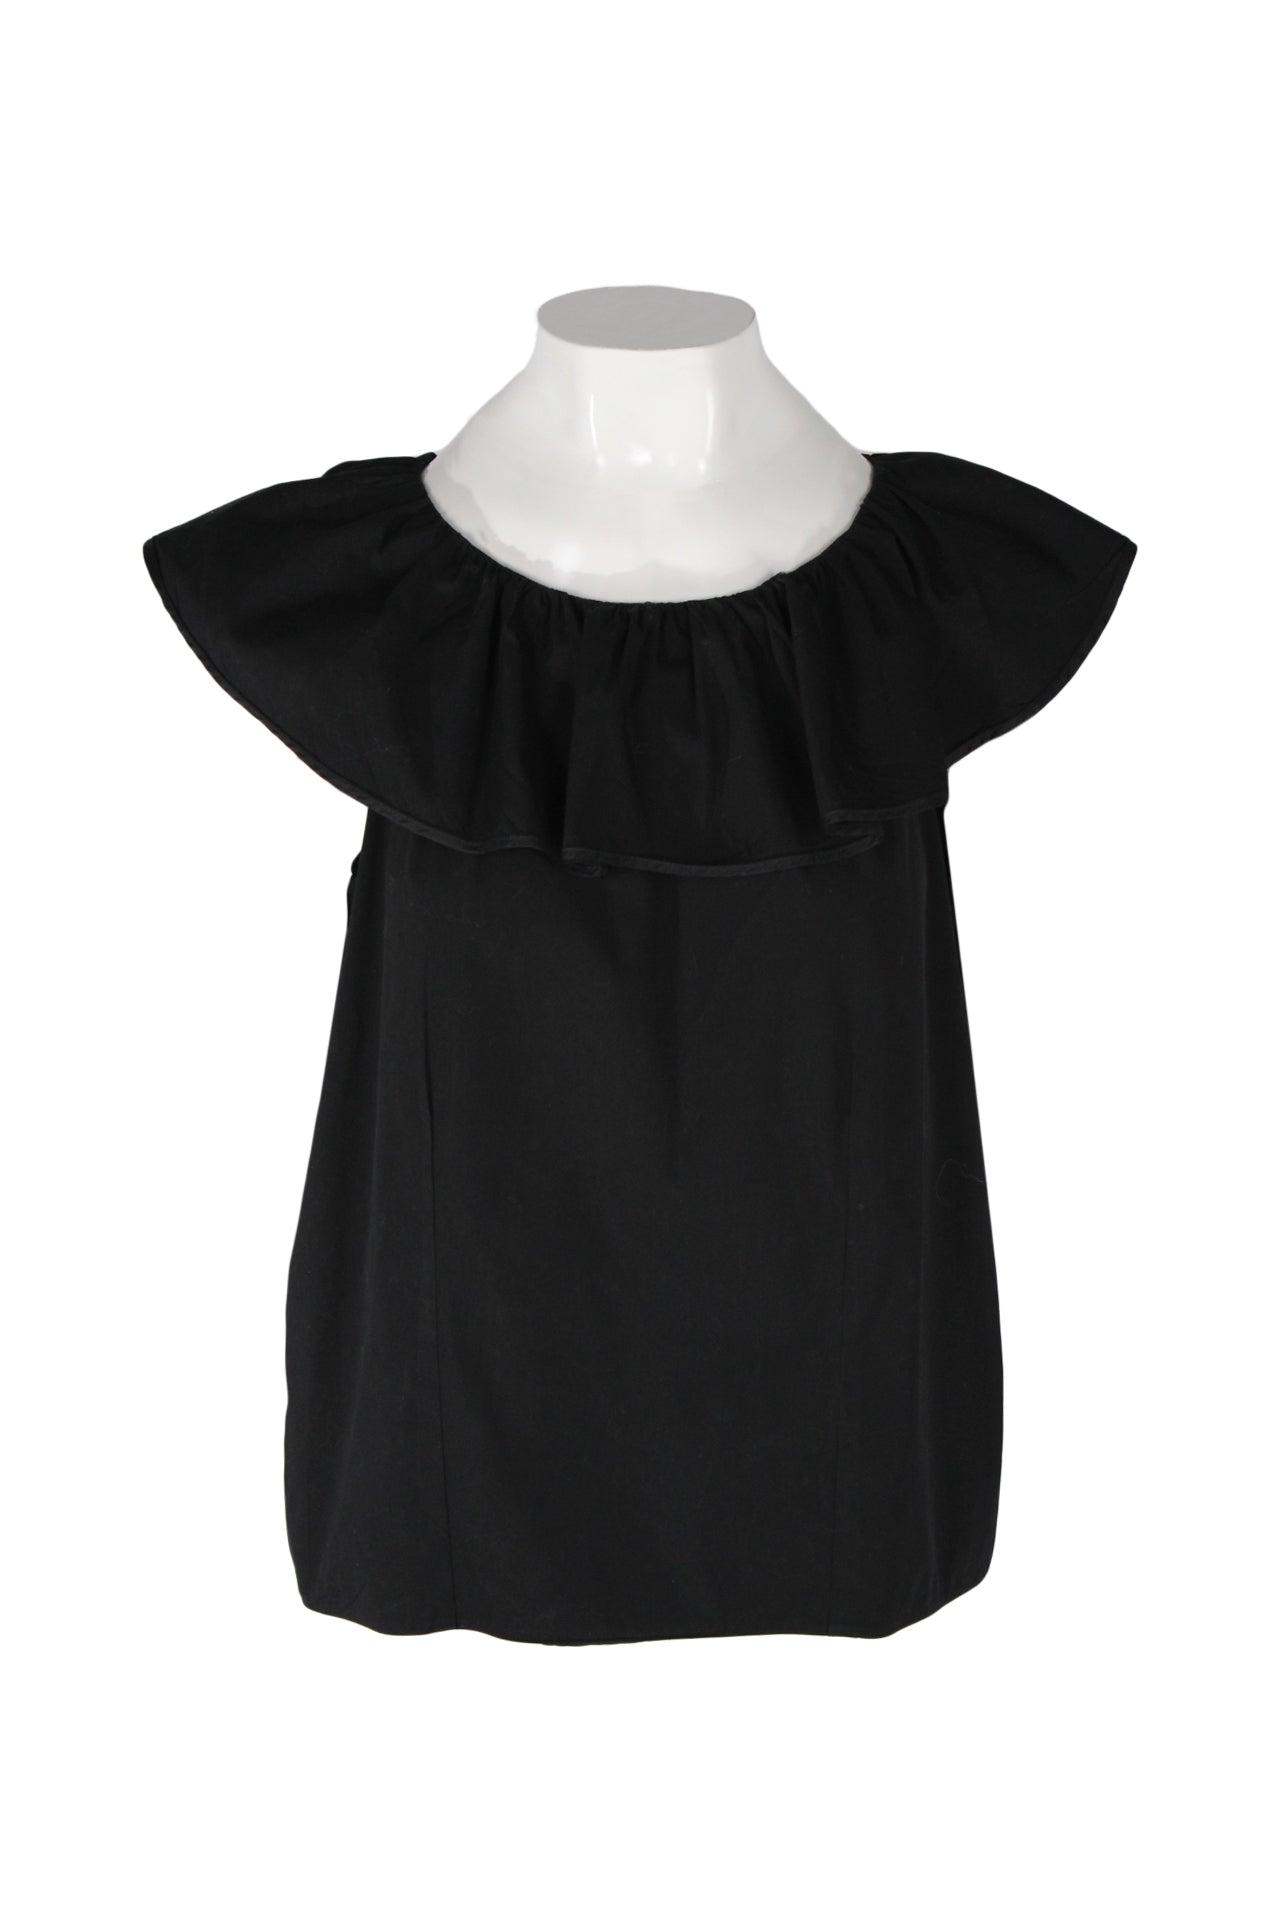 front angle prada black sleeveless top on feminine mannequin torso featuring ruffle-embellished neckline.